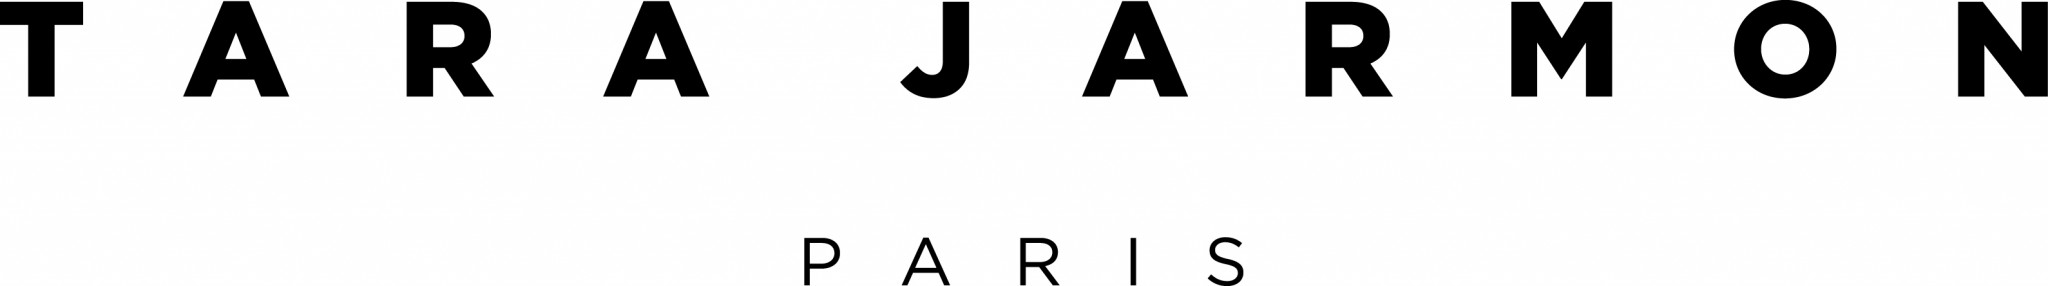 Logo TARA JARMON